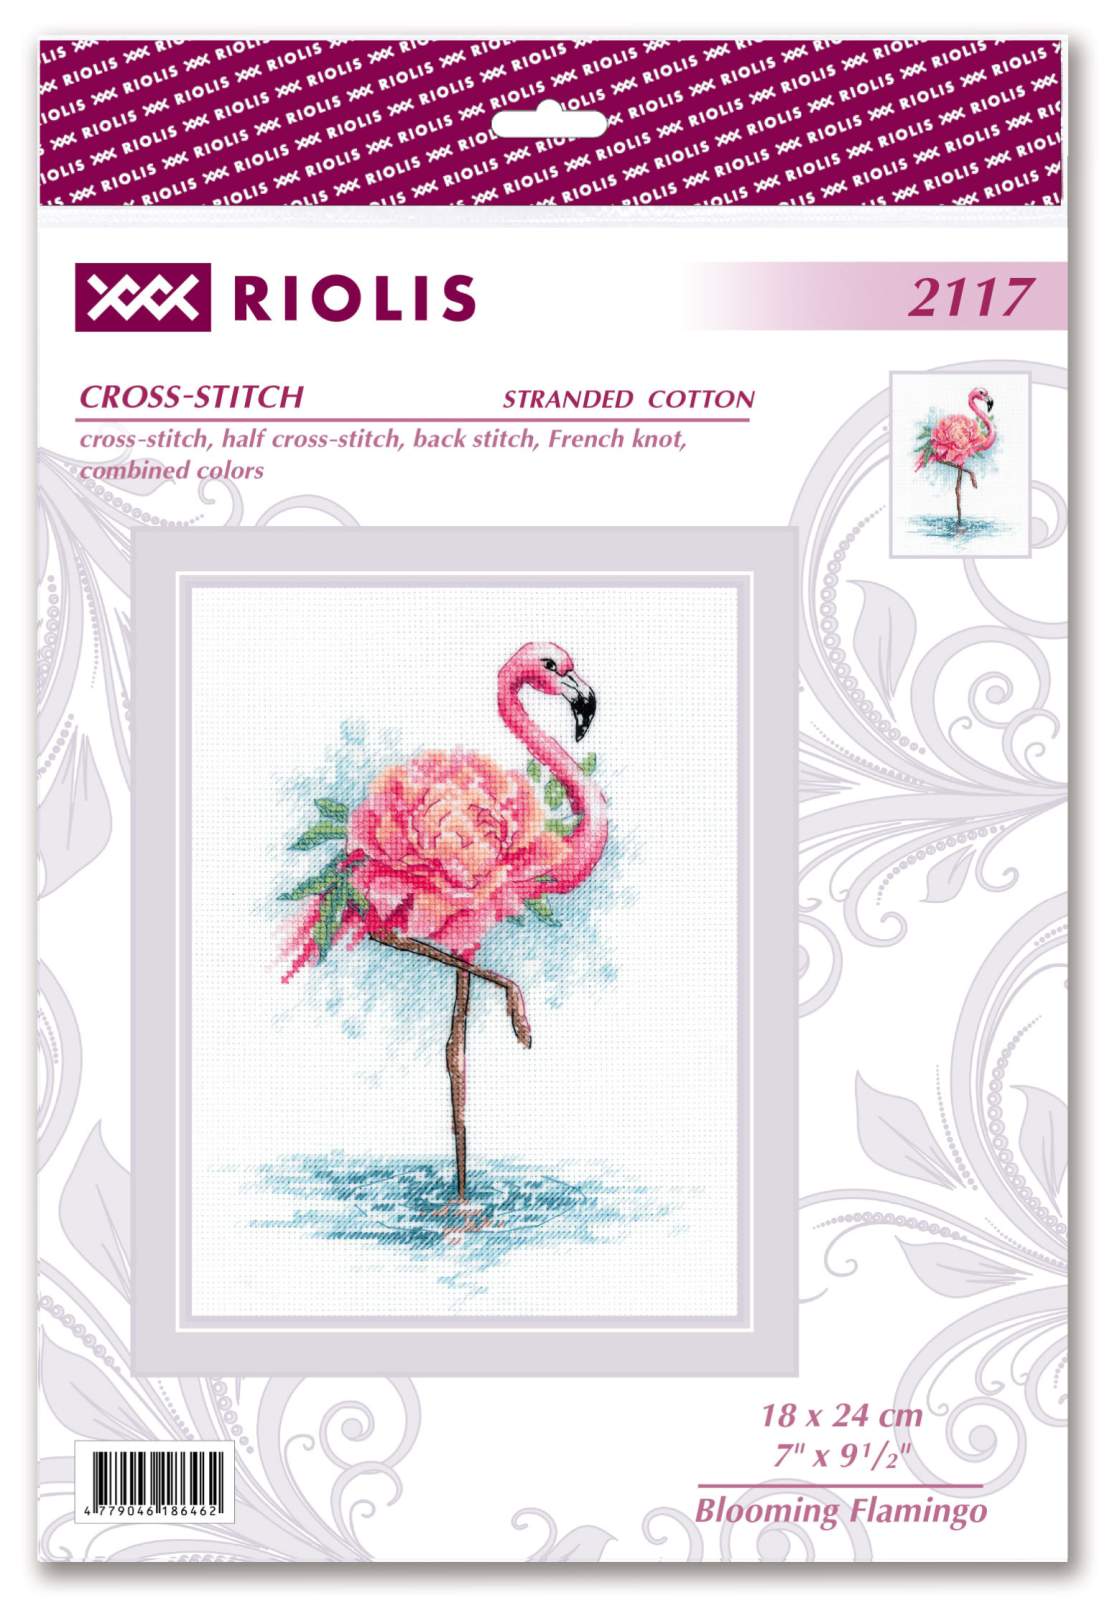 Cross Stitch Kit - "Blooming Flamenco" - Riolis 2117